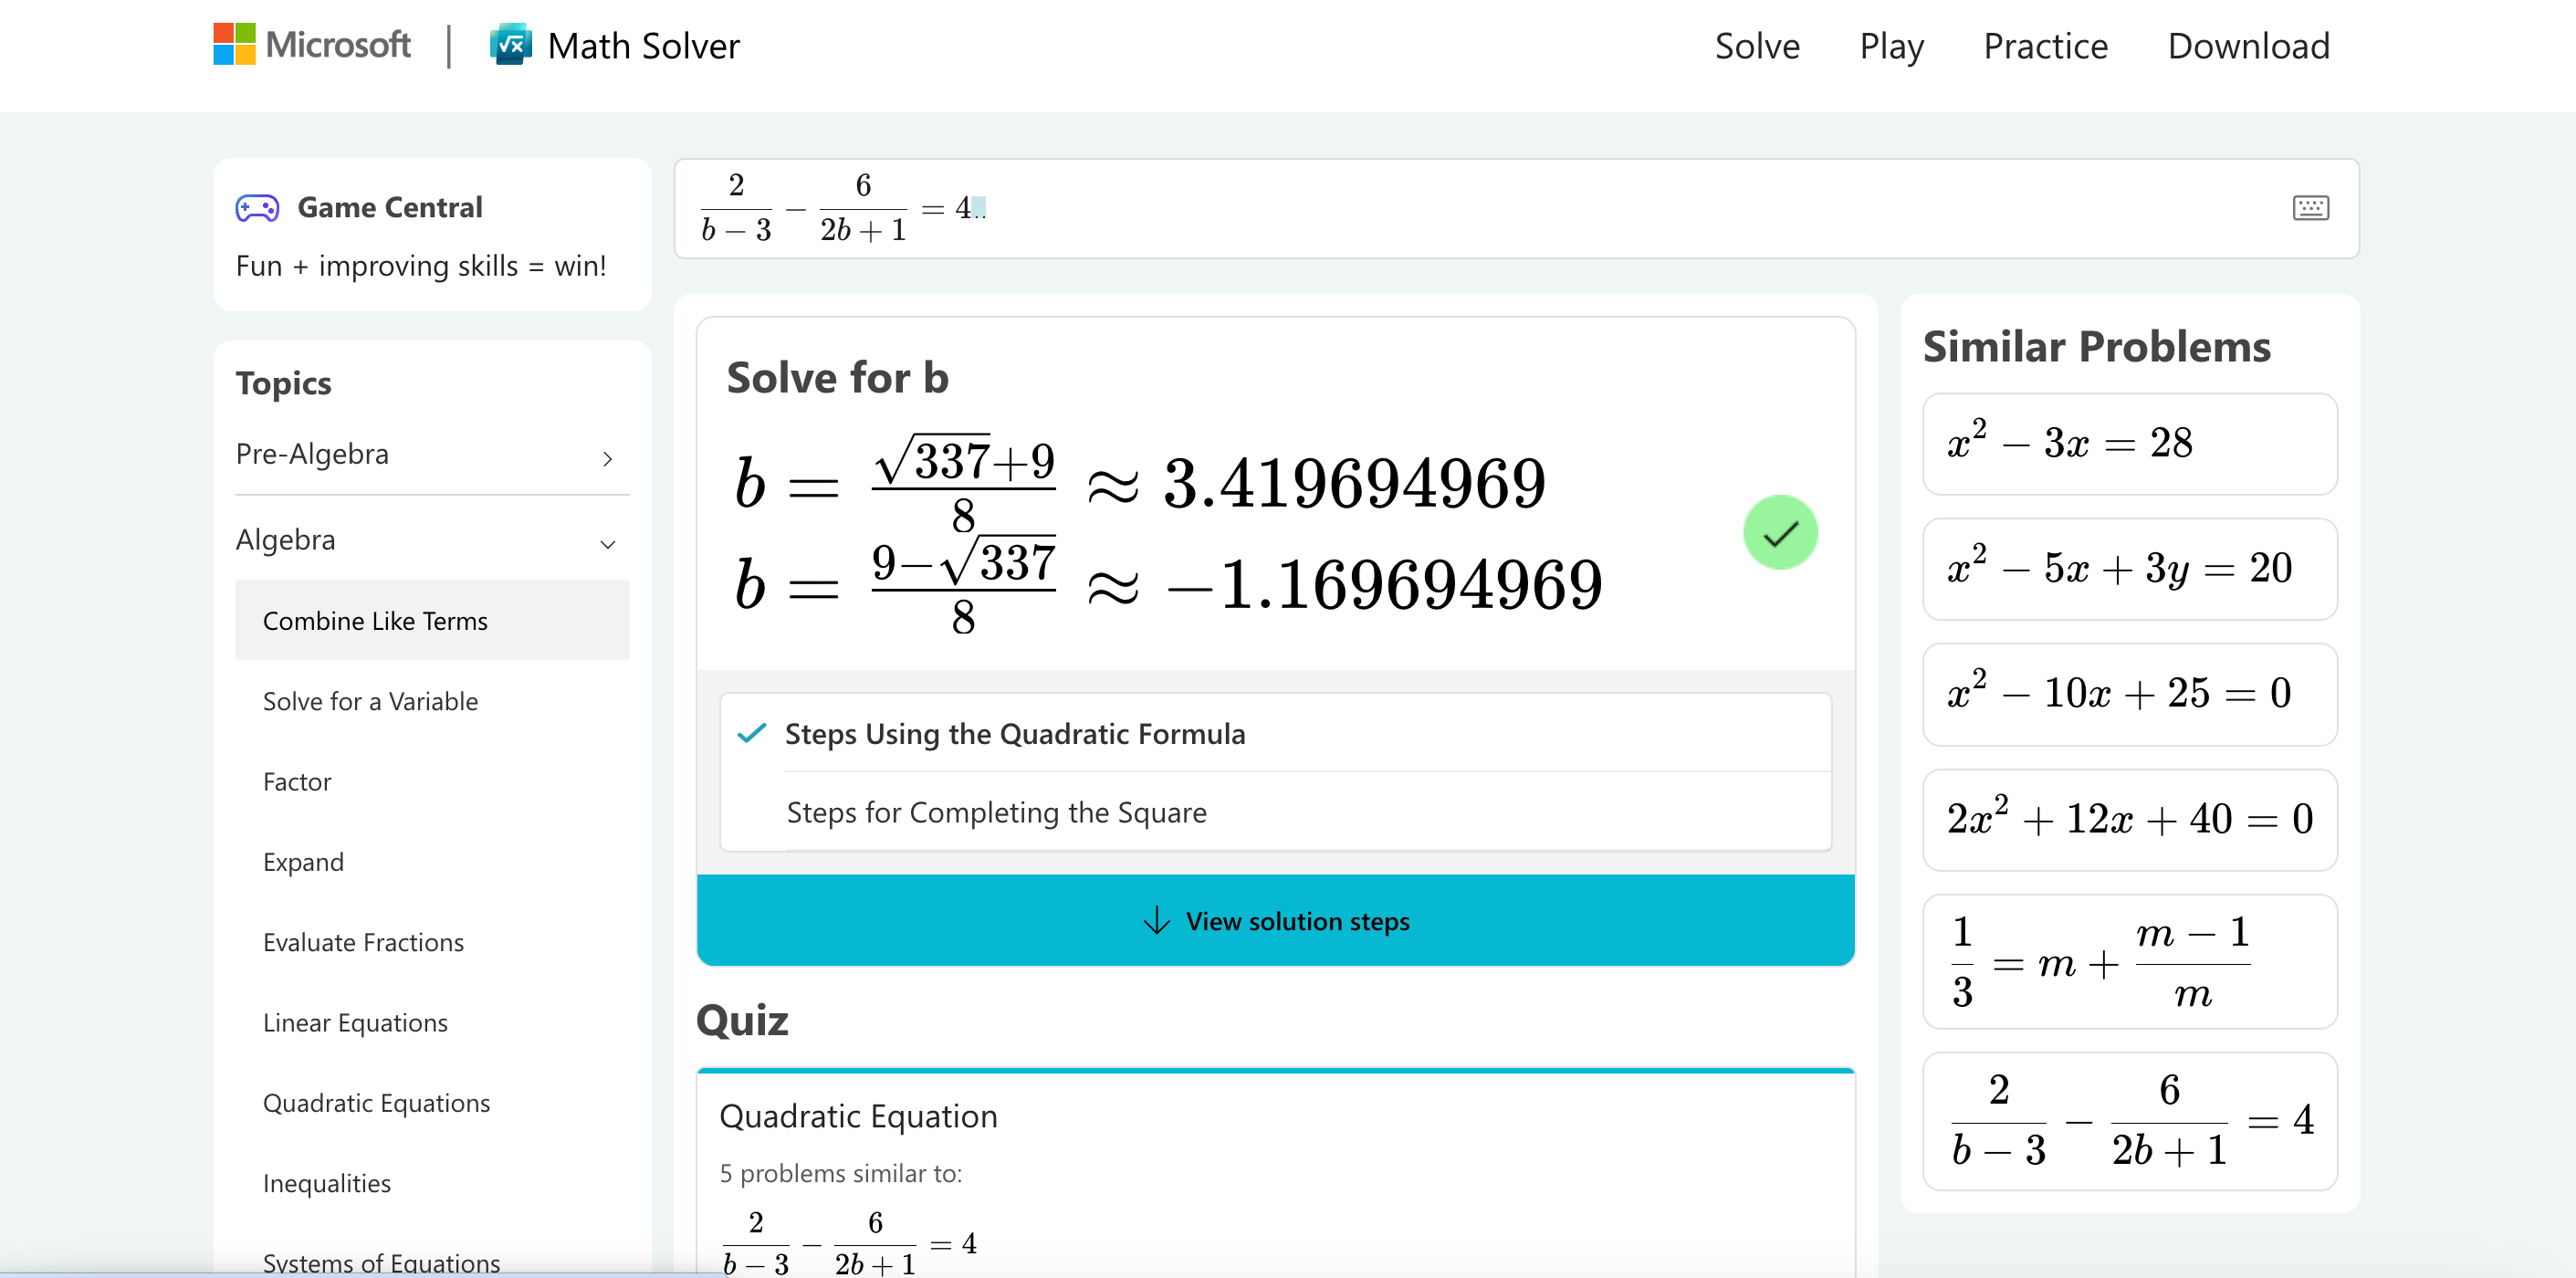 Microsoft MathSolver solves an algebraic equation